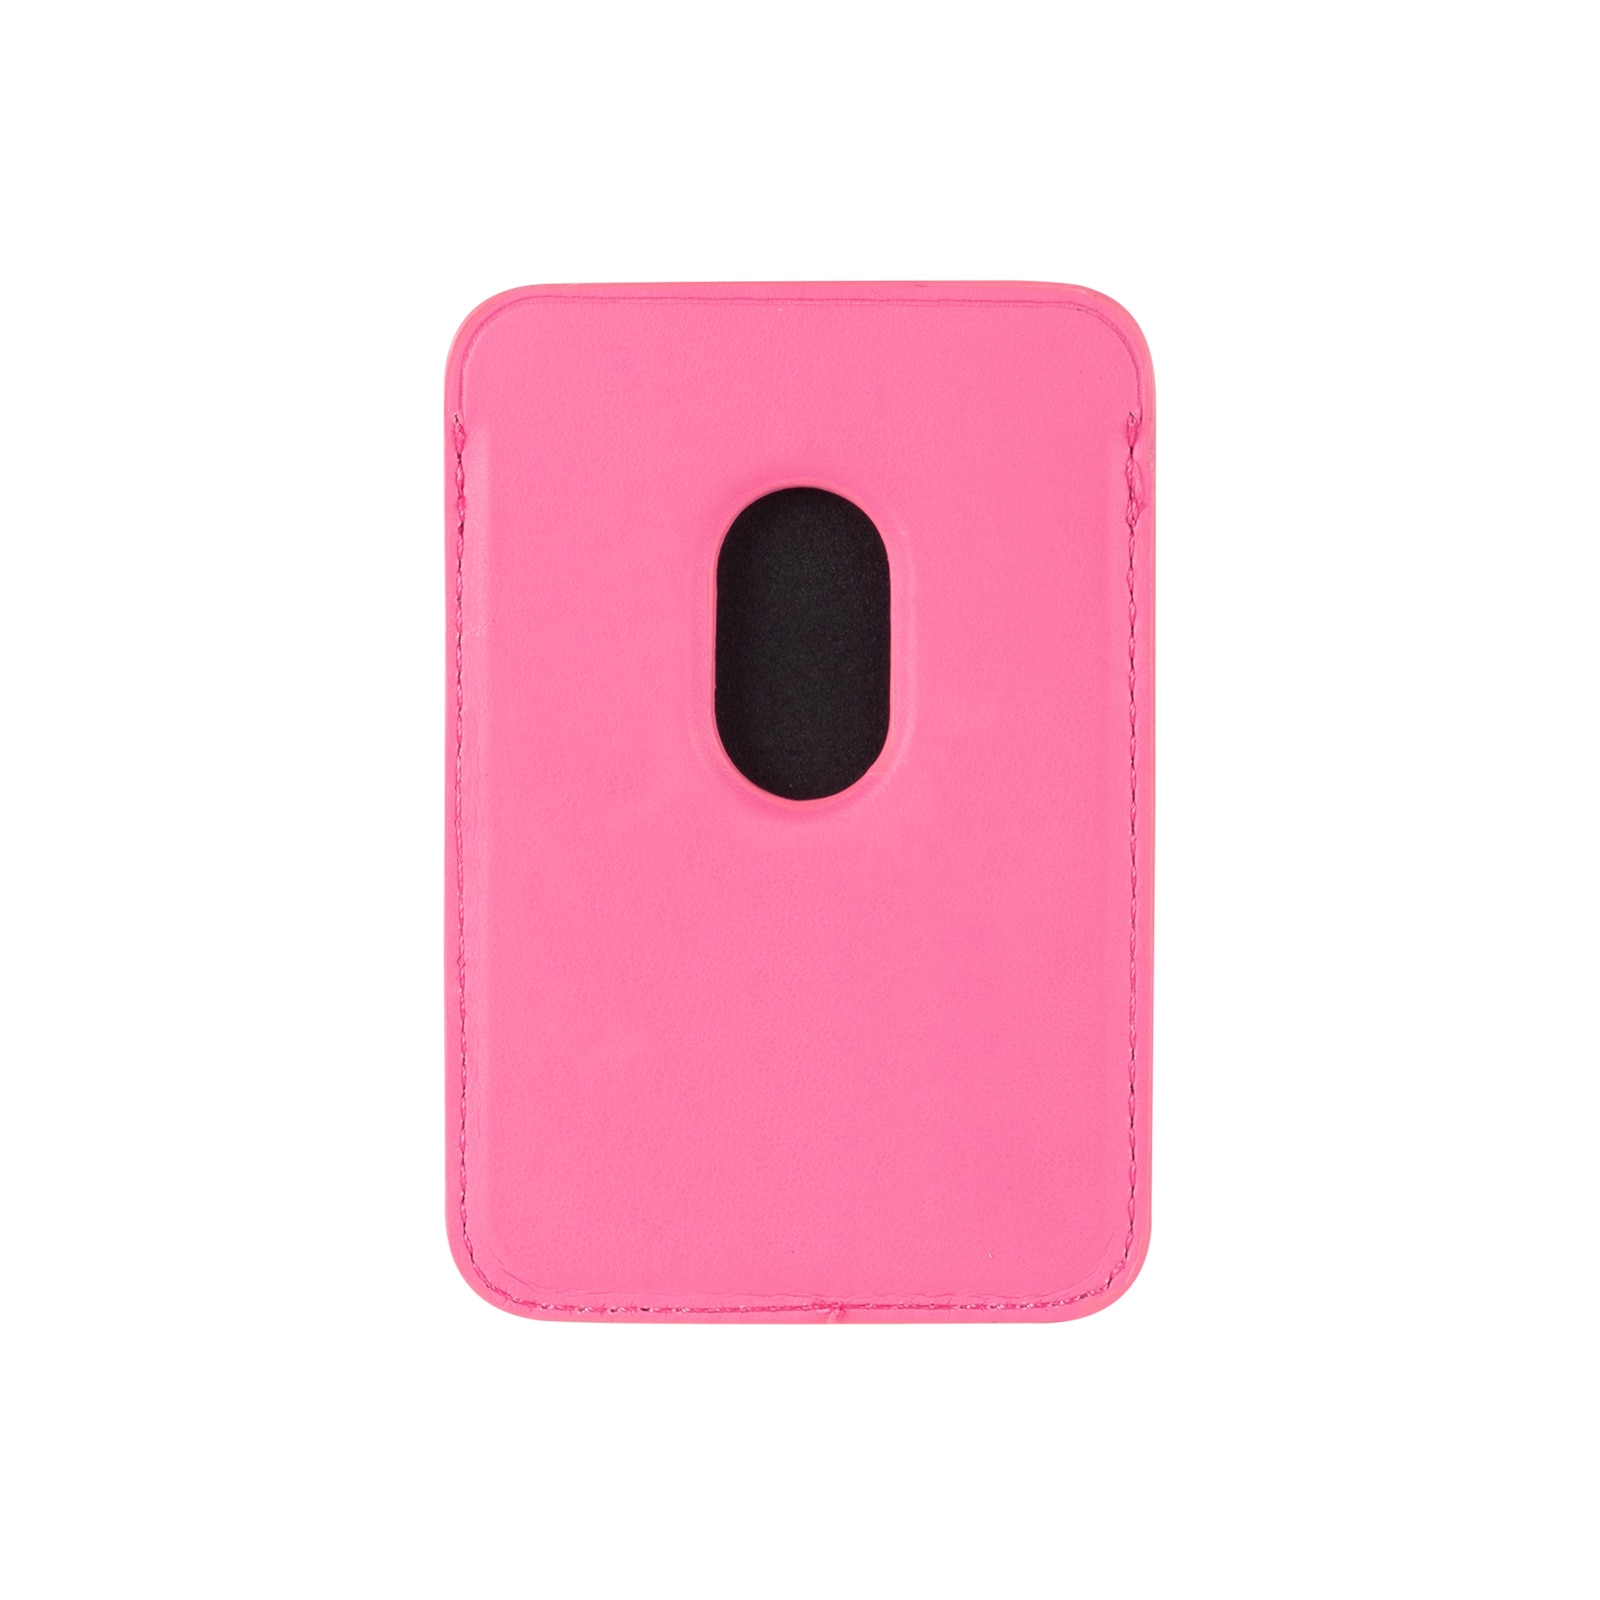 Porte-carte magnétique, Bright Pink